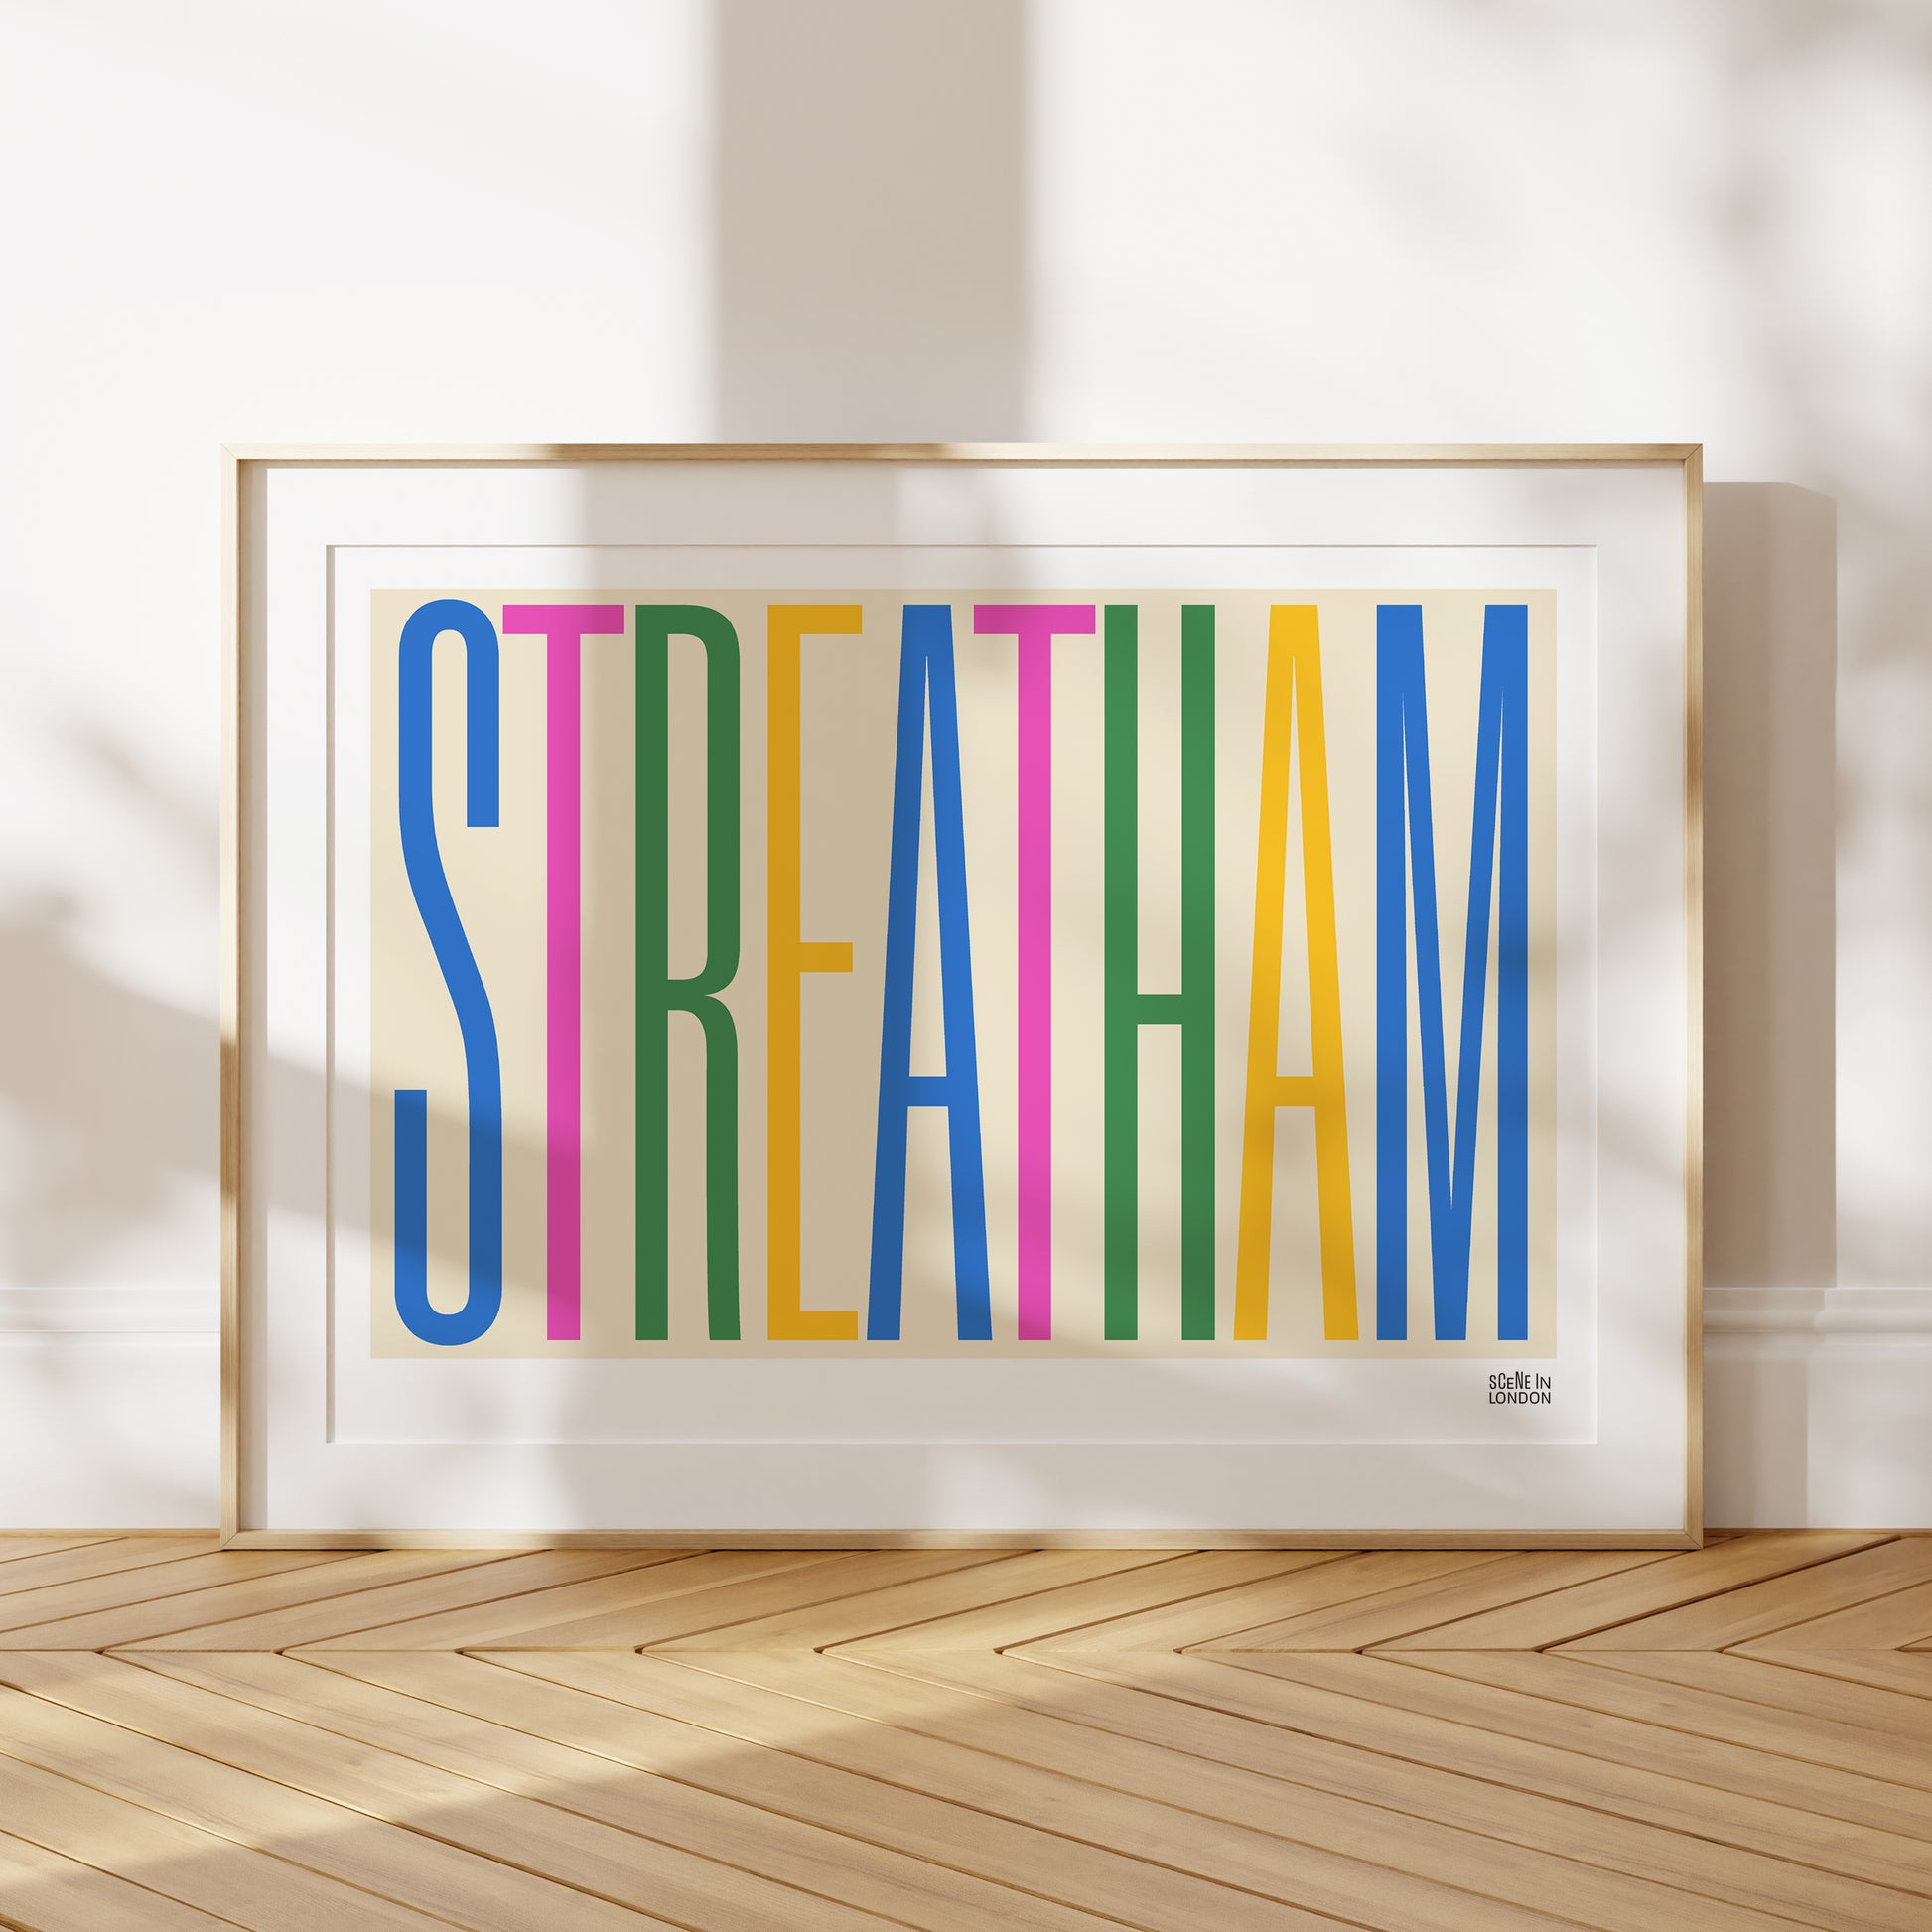 Streatham typographic art print in frame